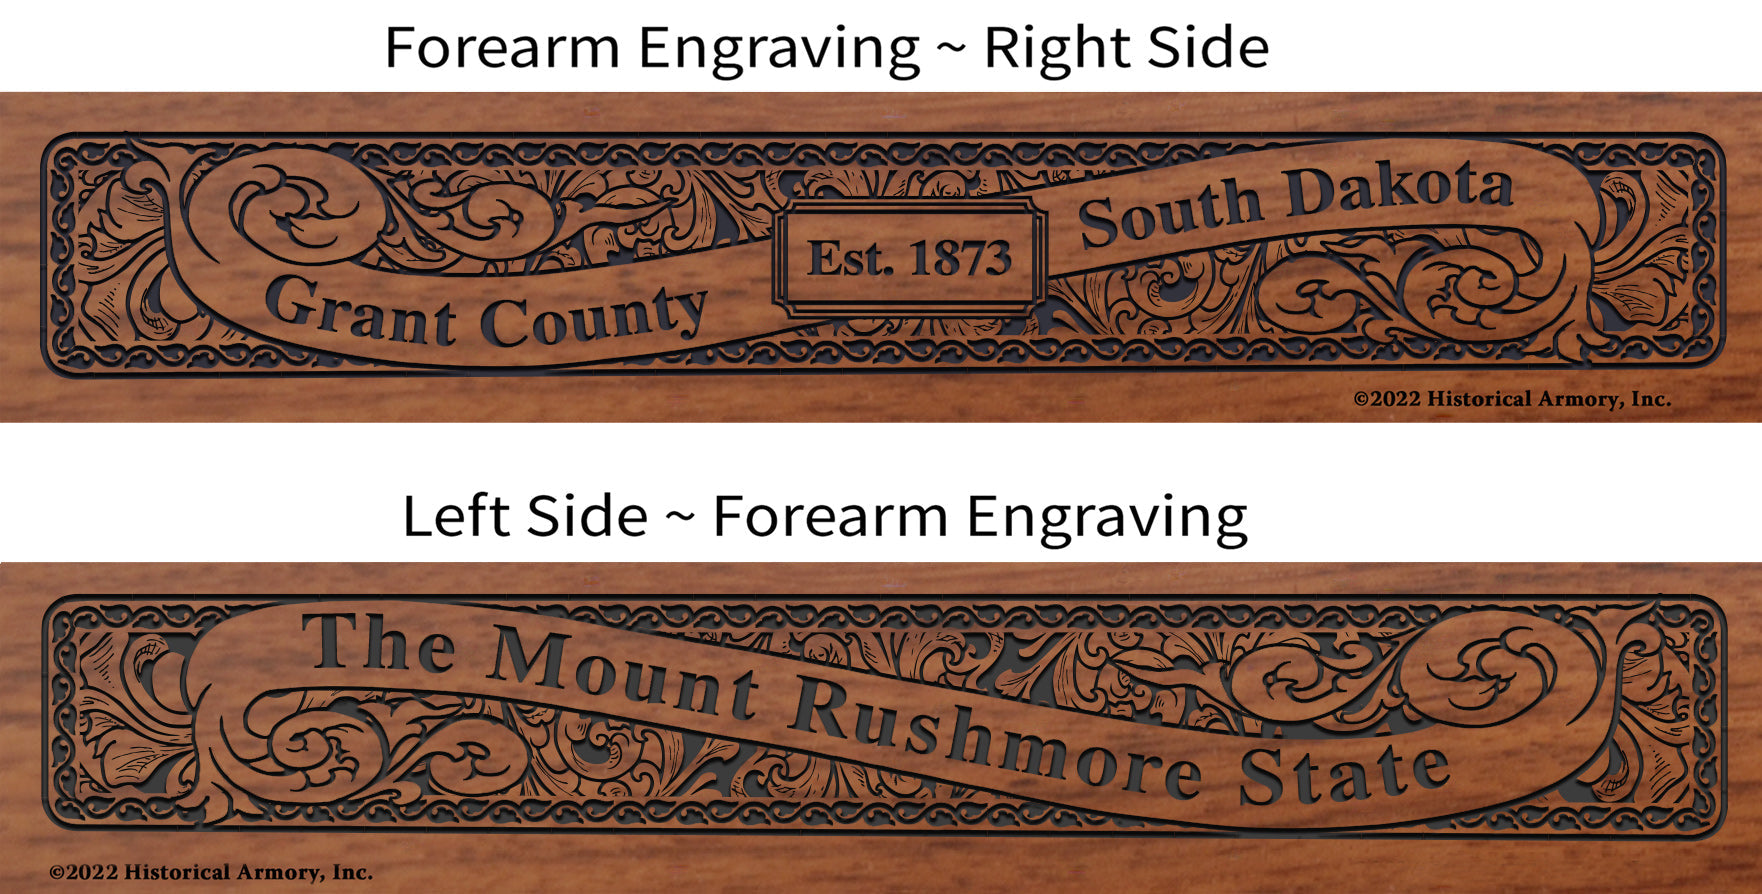 Grant County South Dakota Engraved Rifle Forearm